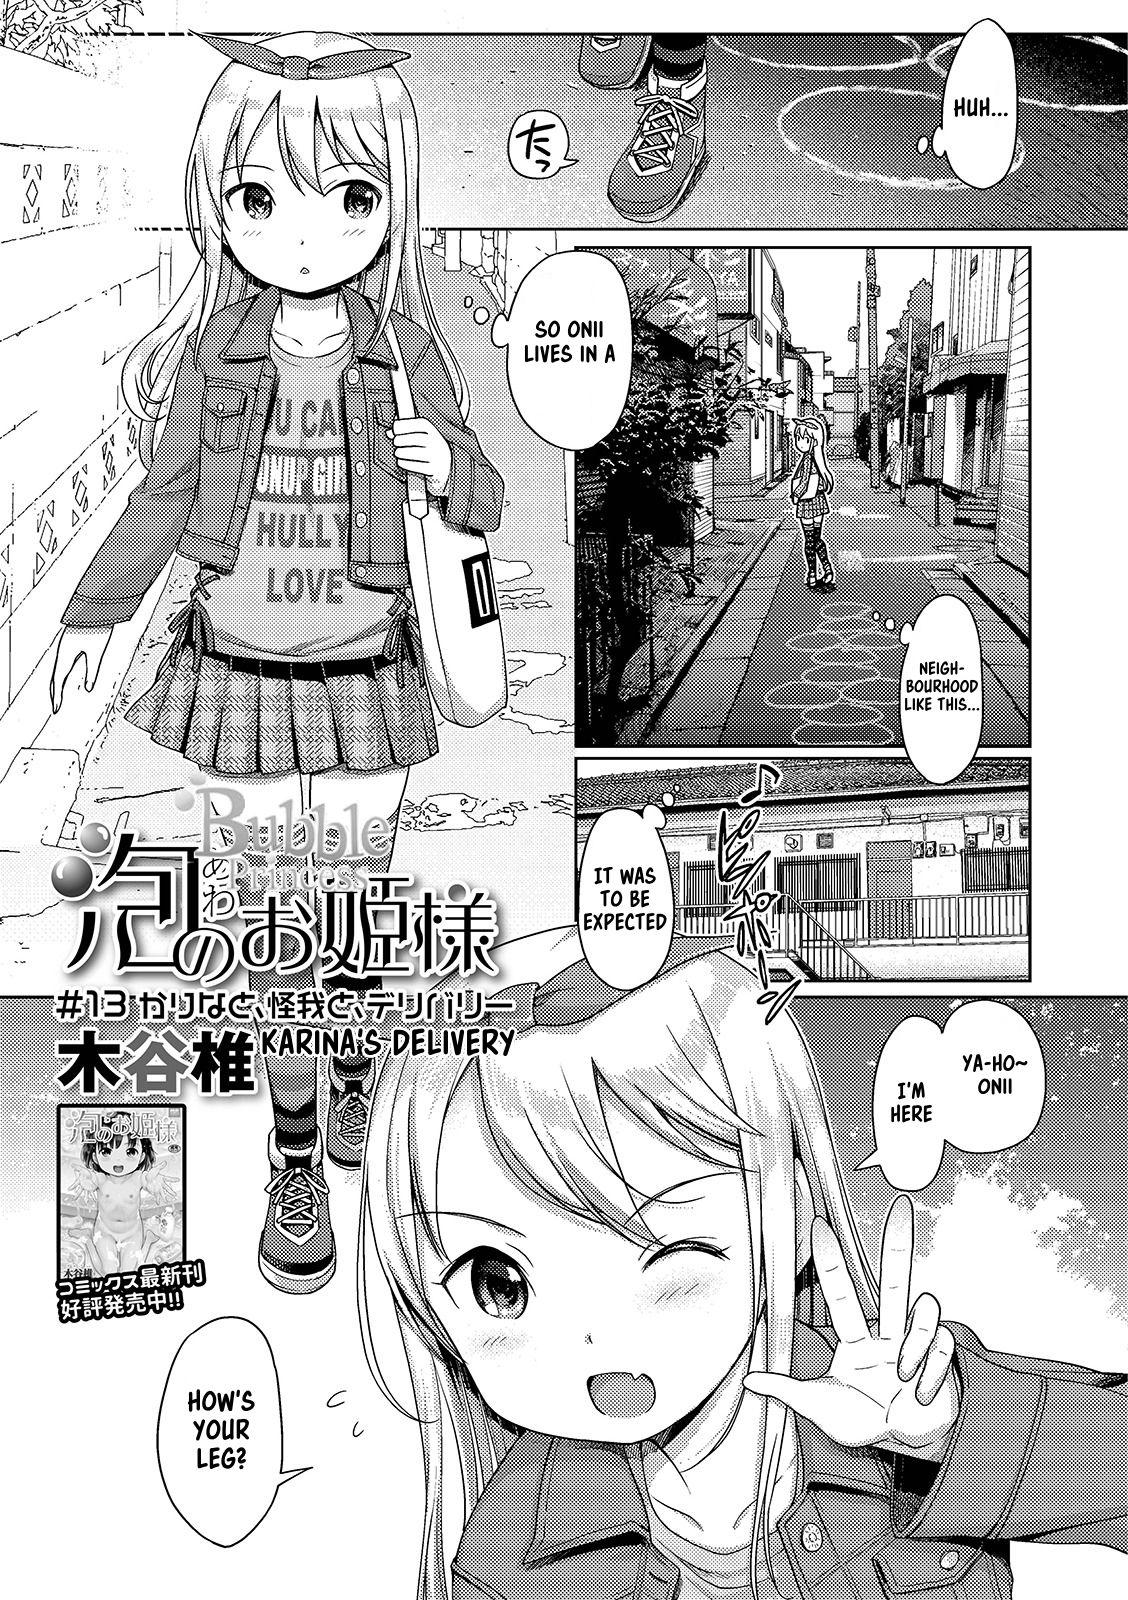 Awa no Ohime-sama #13 Karina to, Kega to, Deribarii | Bubble Princess #13! Karina's delivery 0